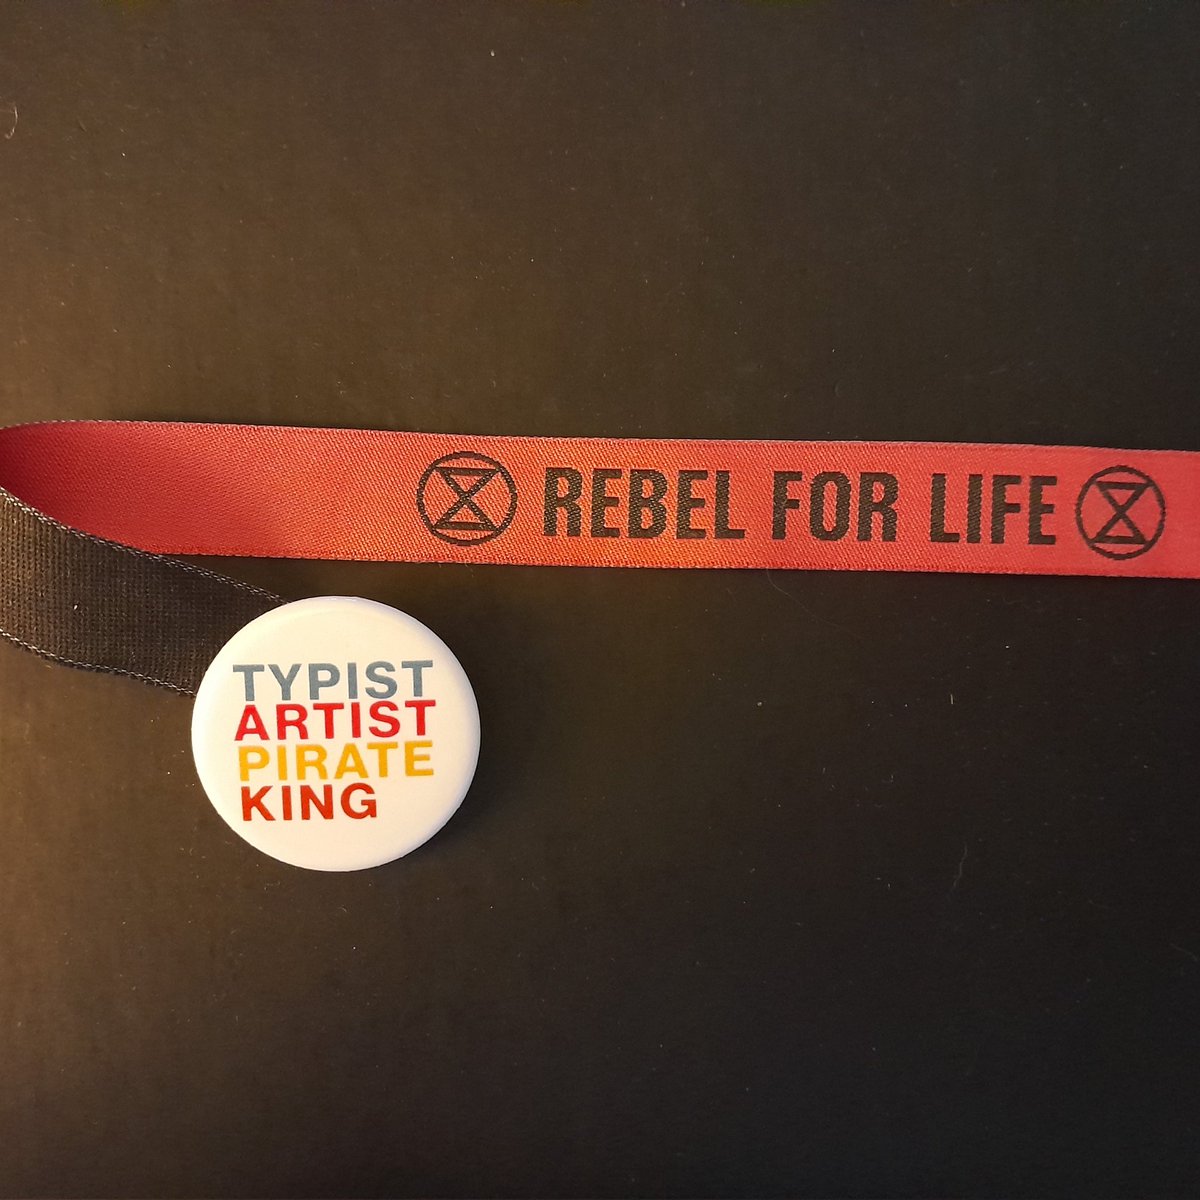 #TypistArtistPirateKing Longing to see @_CarolMorley 's latest film. Release dates please. #AudreyAmiss is a gem of a subject, gem of a name. #Scrapbook #Life  @XRebellionUK #RebelForLife @XrRebel #WritersRebel